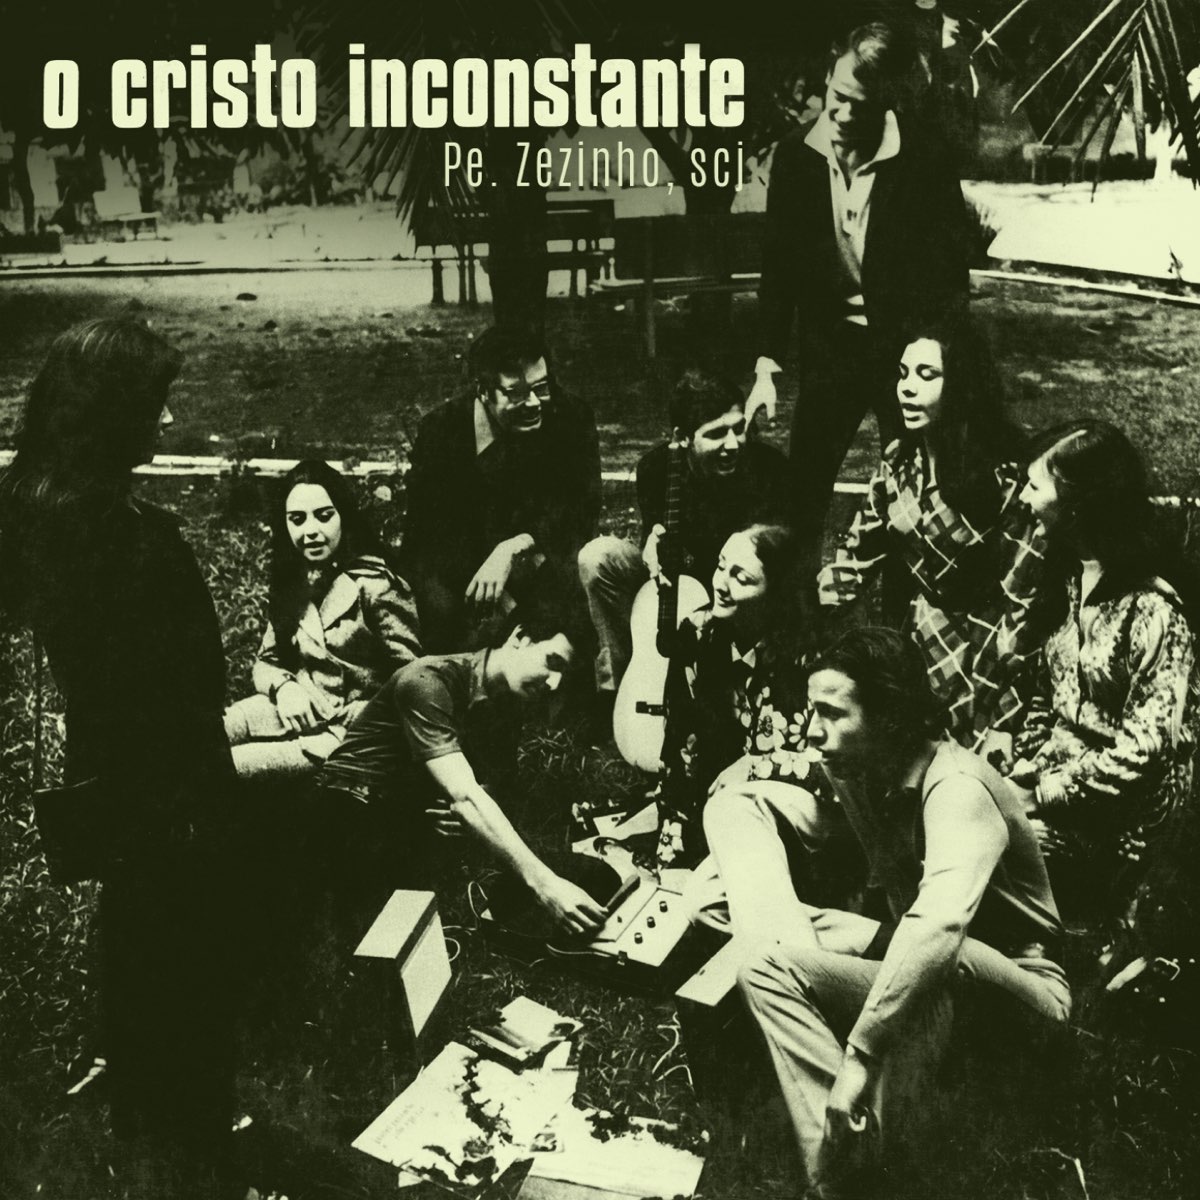 O Cristo Inconstante - EP by Padre Zezinho scj on Apple Music